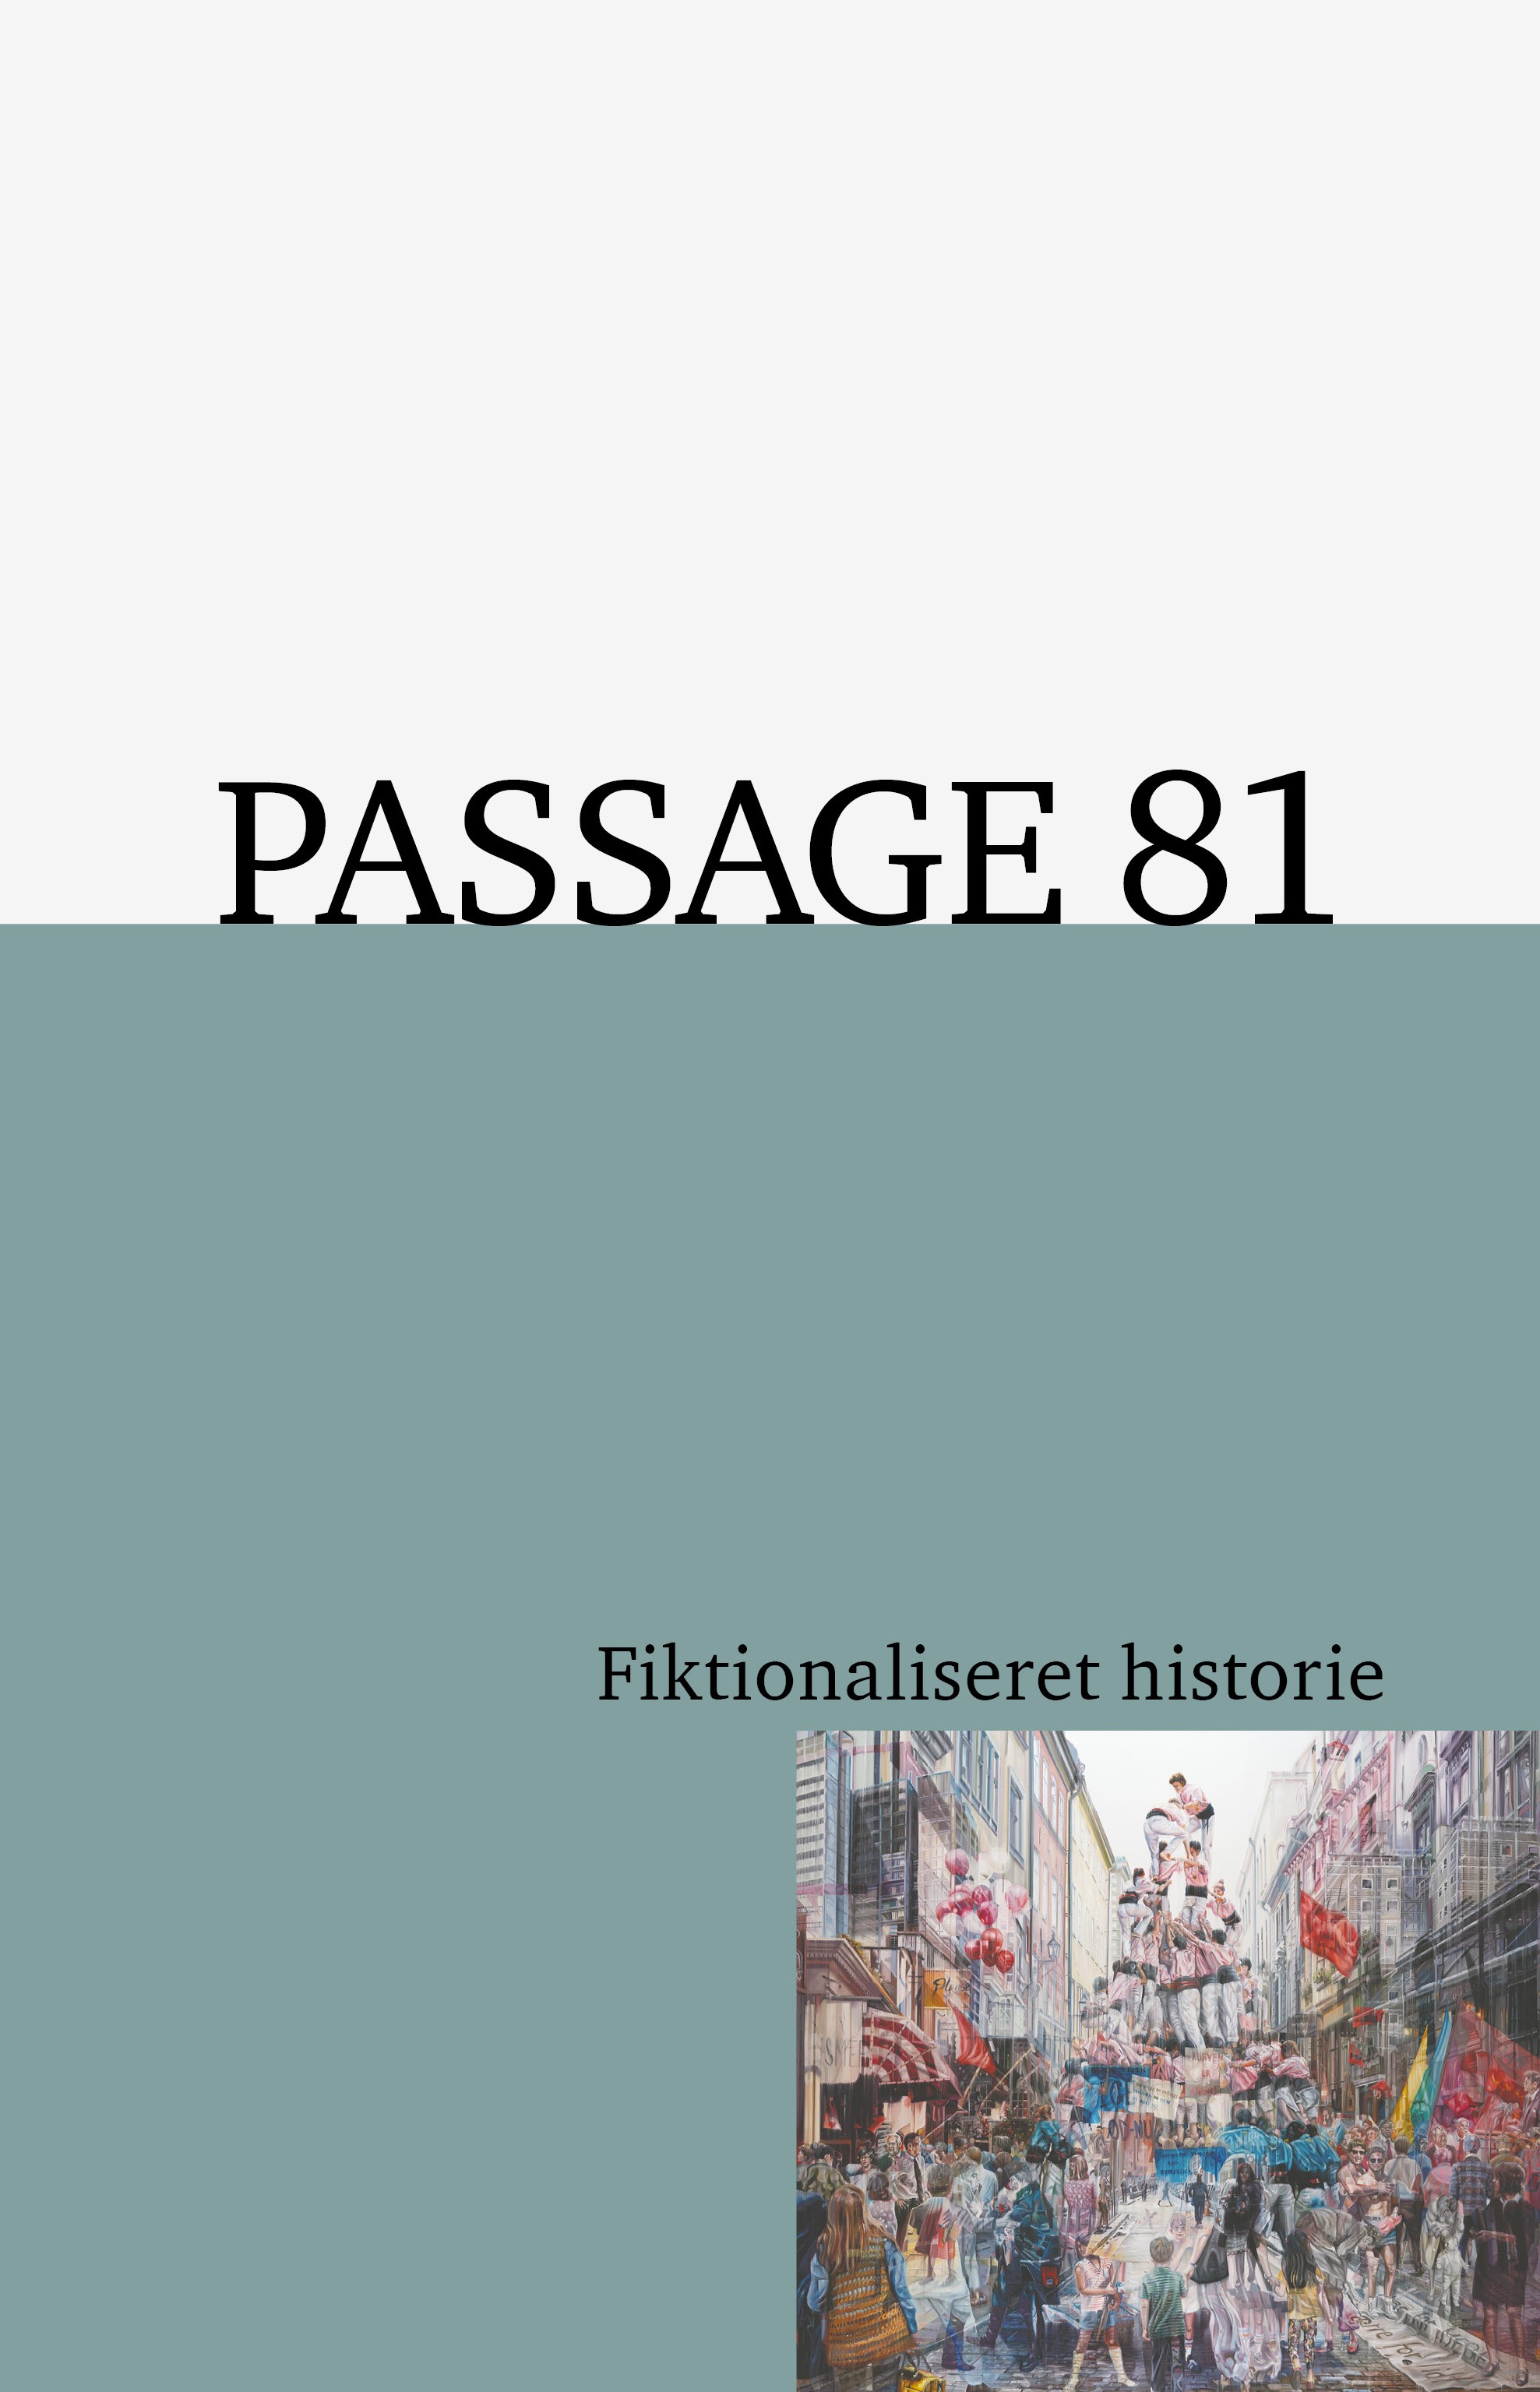 					Se Årg. 34 Nr. 81 (2019): Fiktionaliseret historie
				